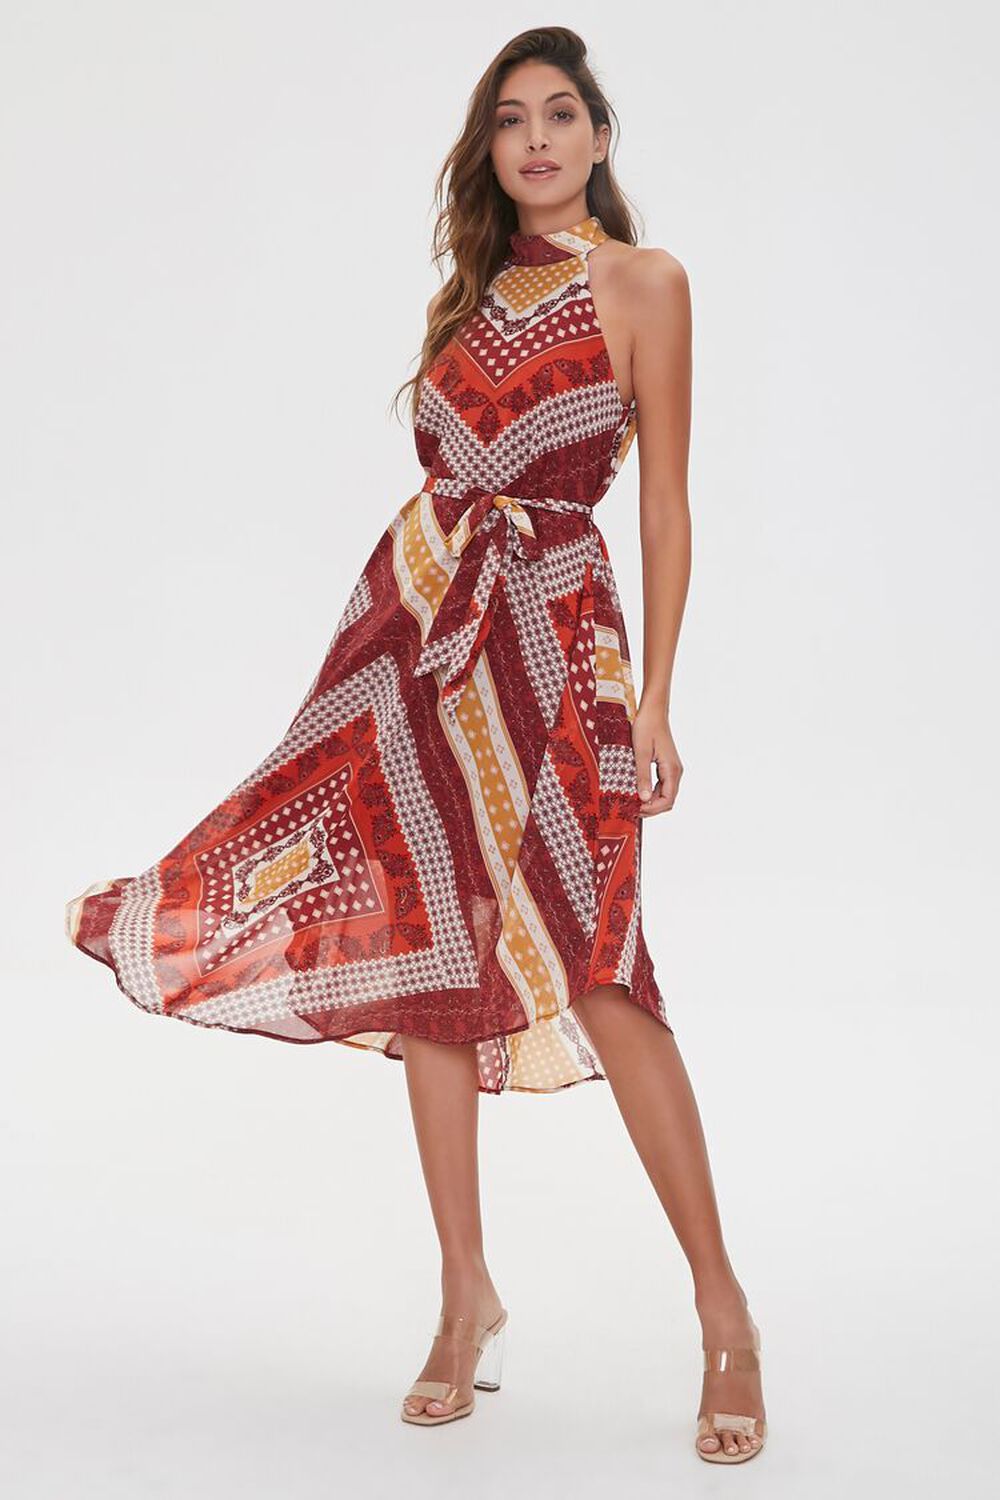 RUST/MULTI Ornate Patchwork Print Dress, image 2